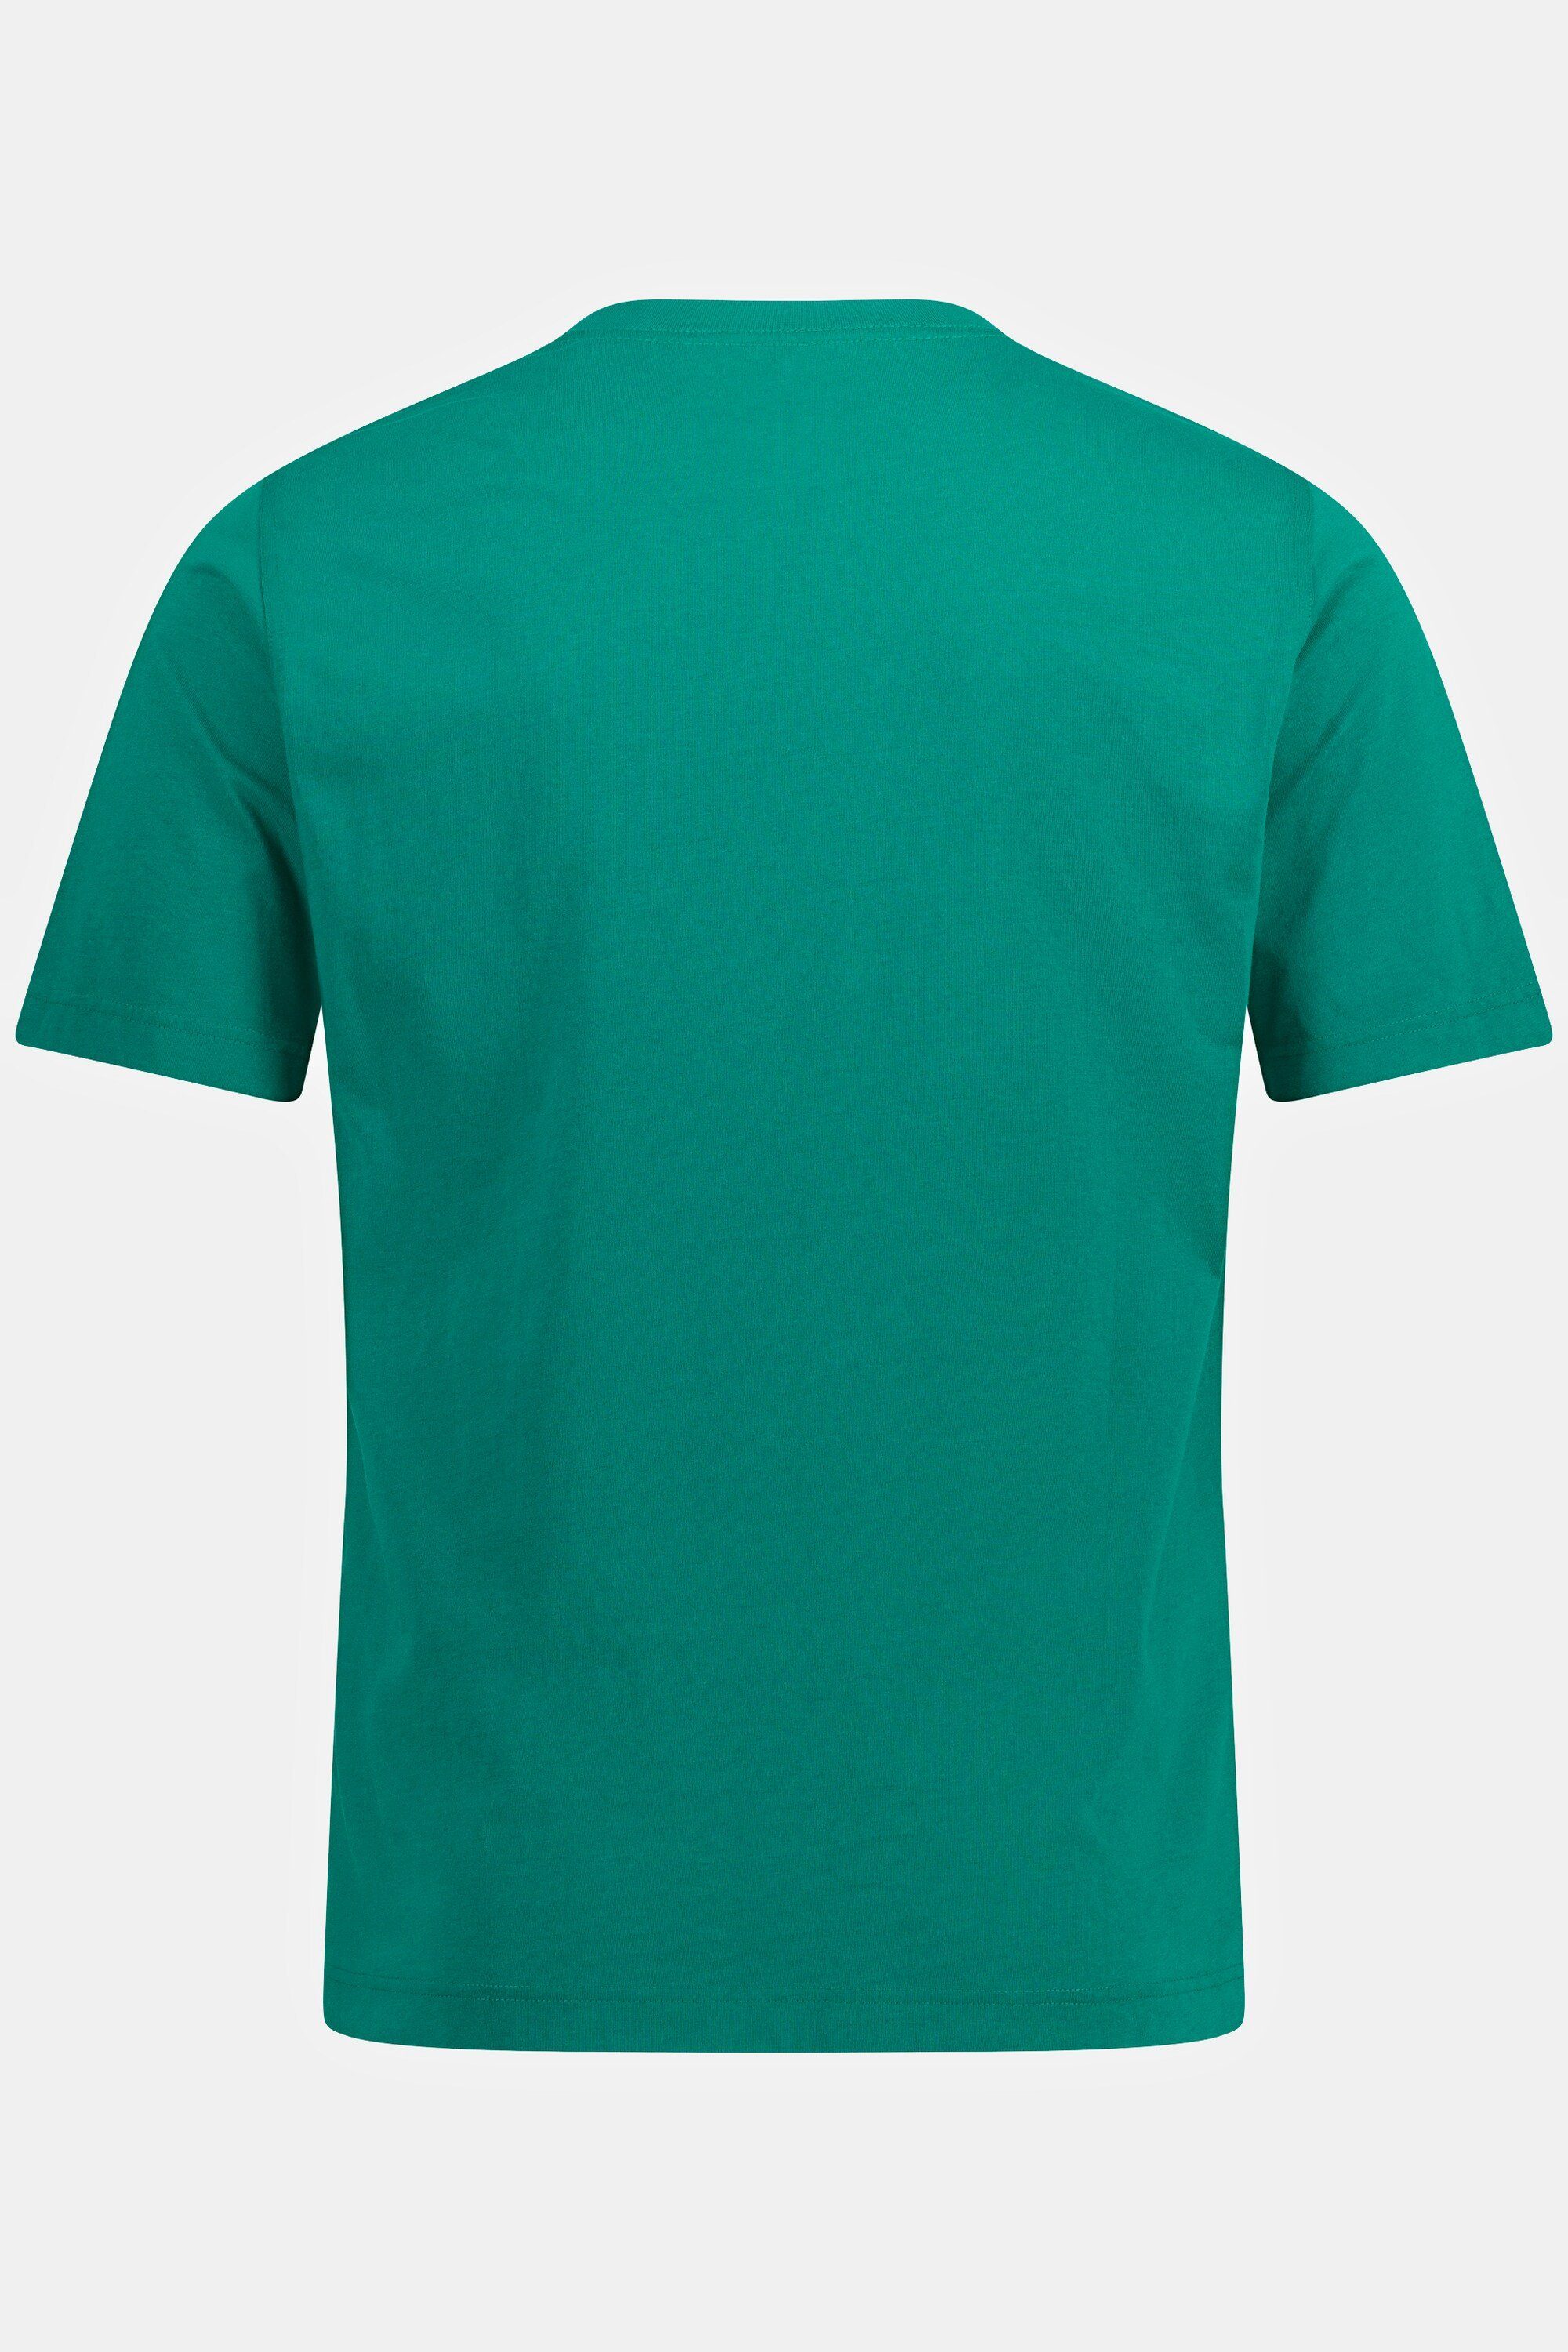 gekämmte bis flaschengrün JP1880 Rundhals Basic Baumwolle T-Shirt 8XL T-Shirt